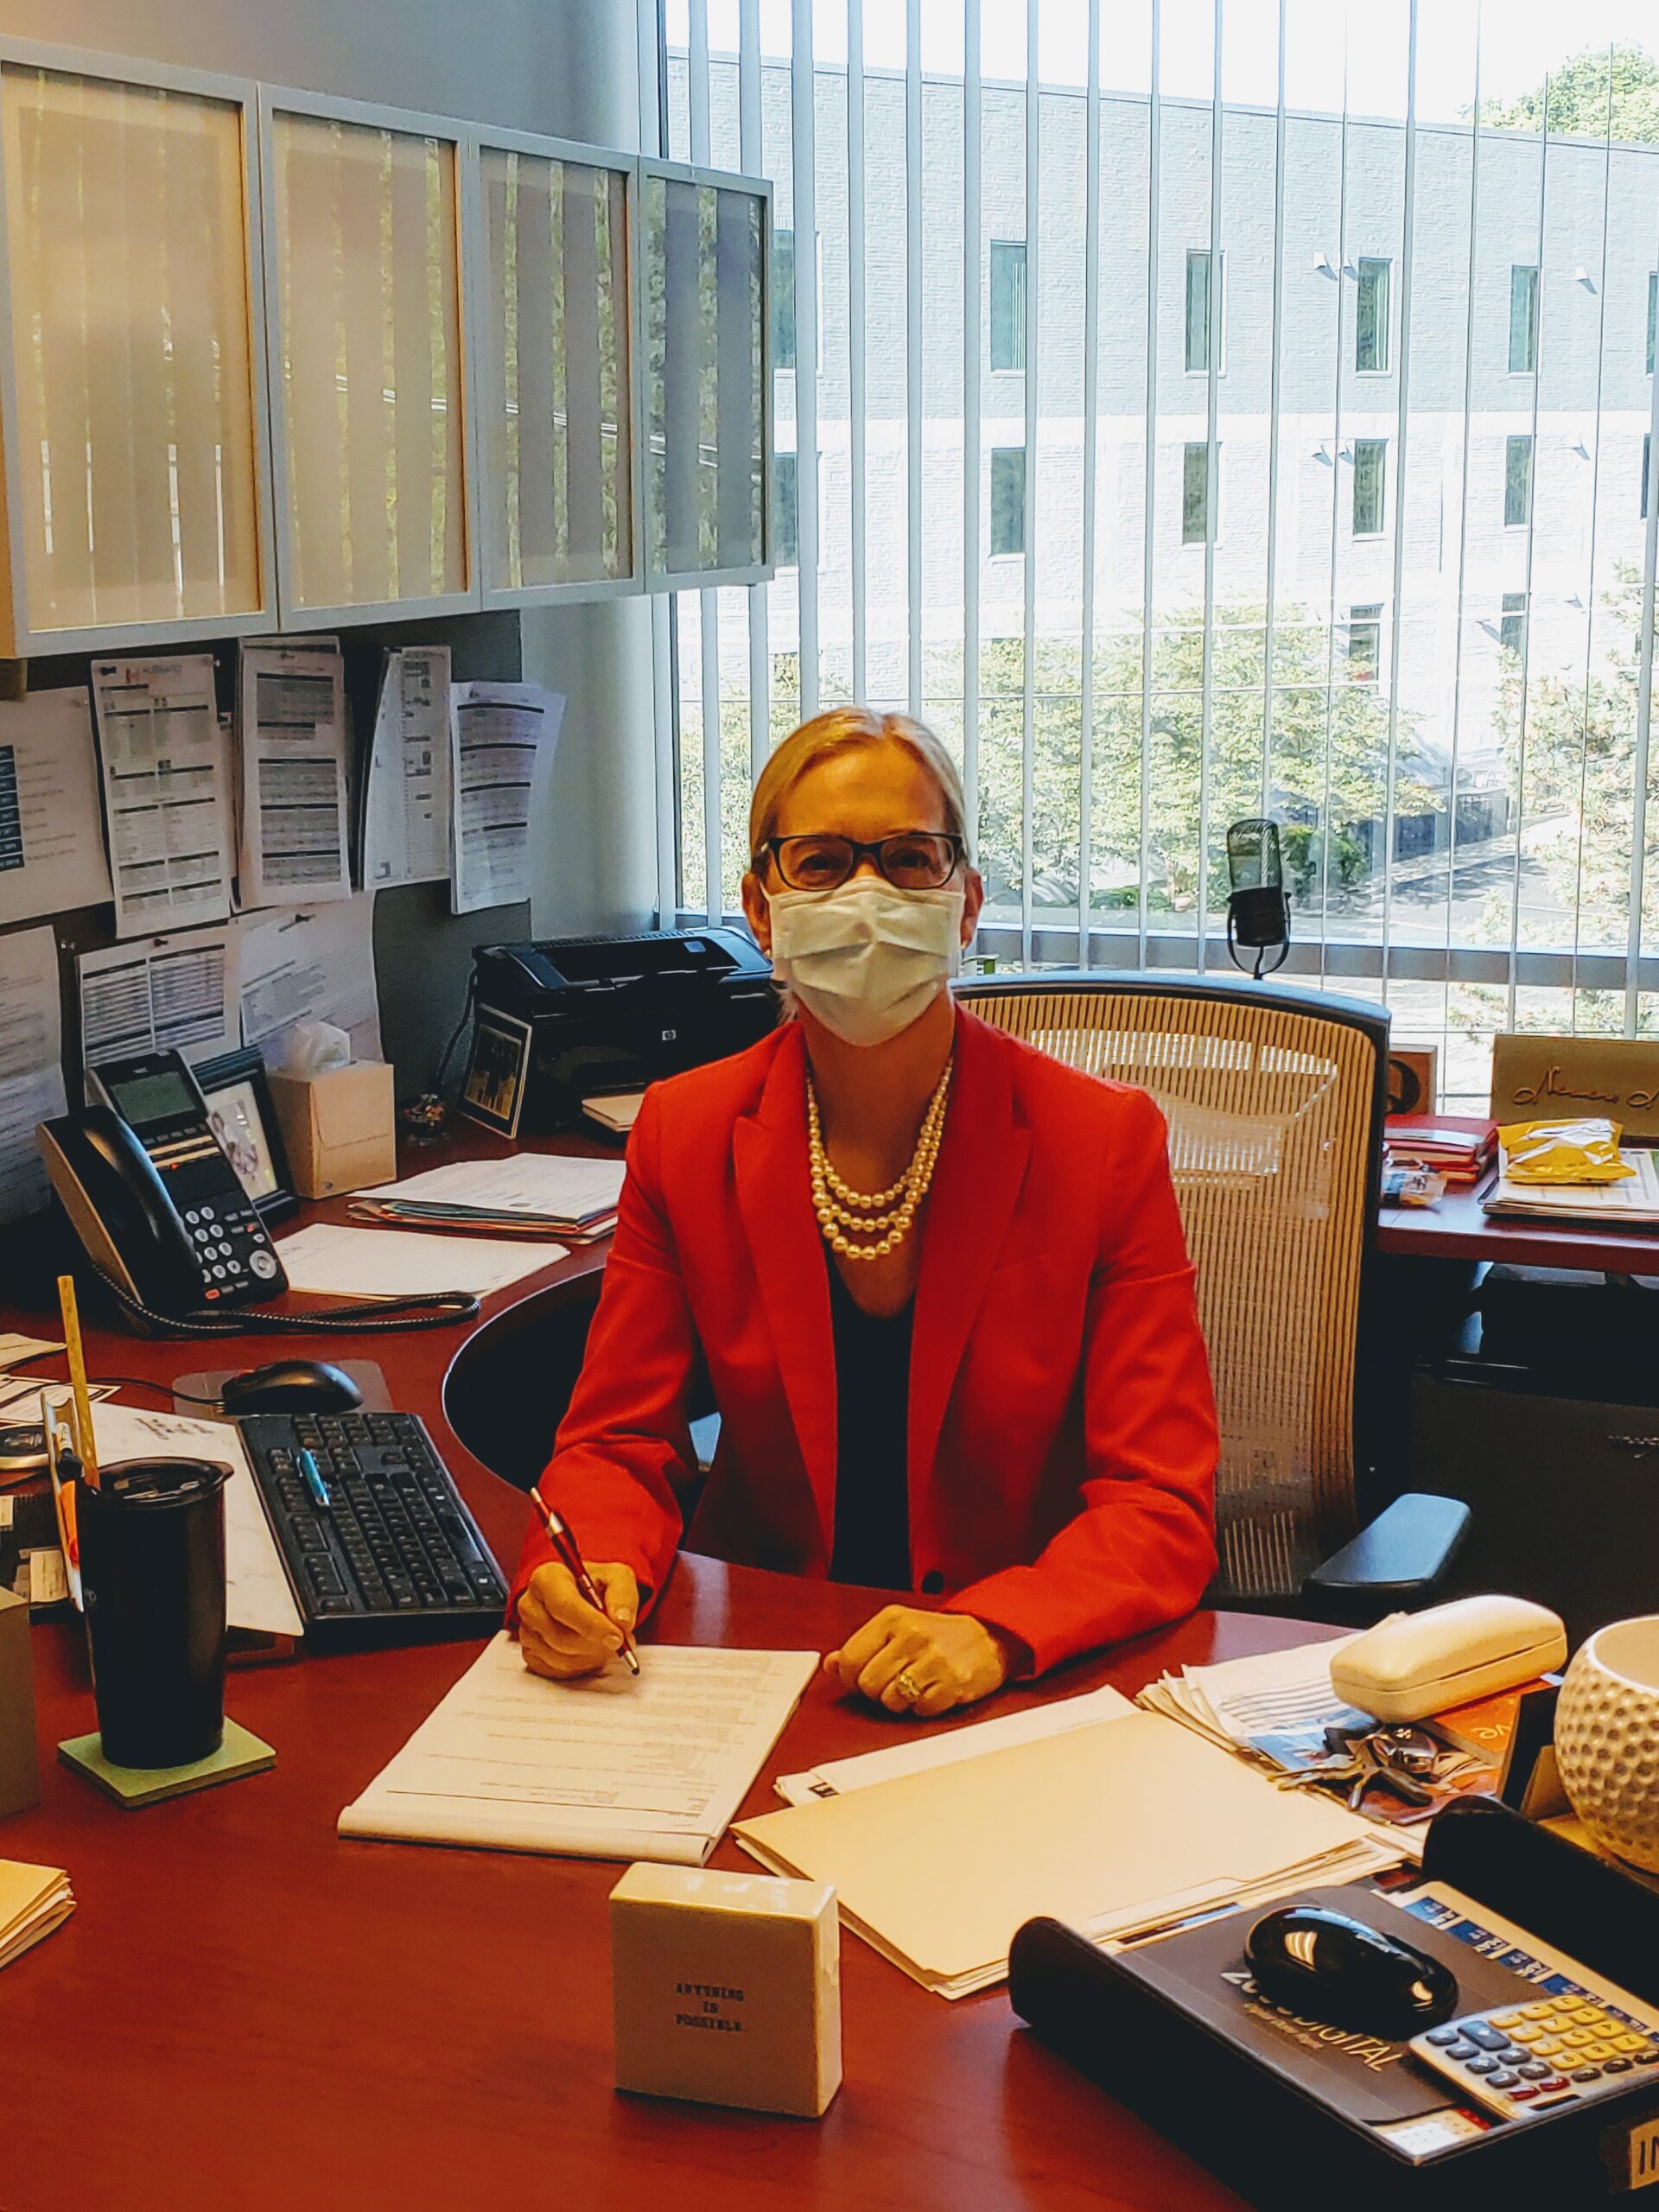 Wearing a mask in office